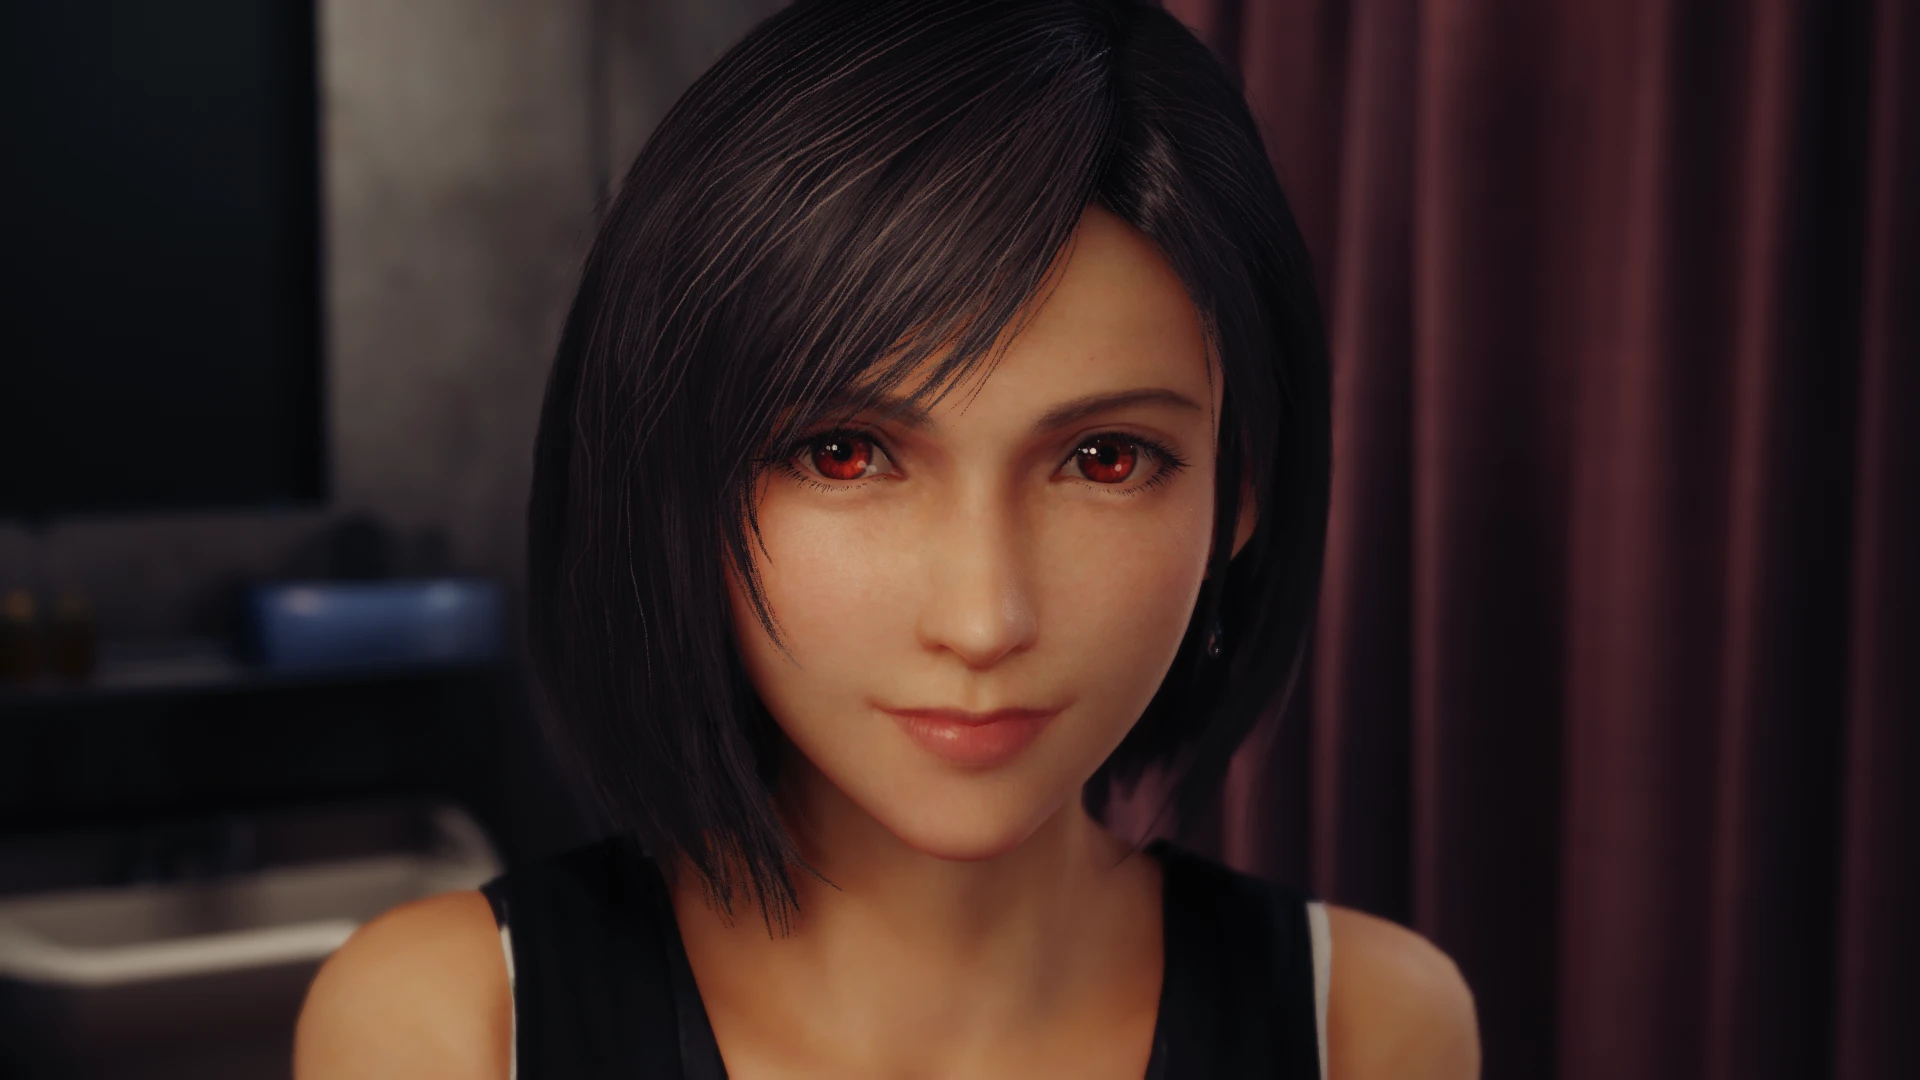 Short hair Tifa mod has arrived! - I love Final Fantasy 7